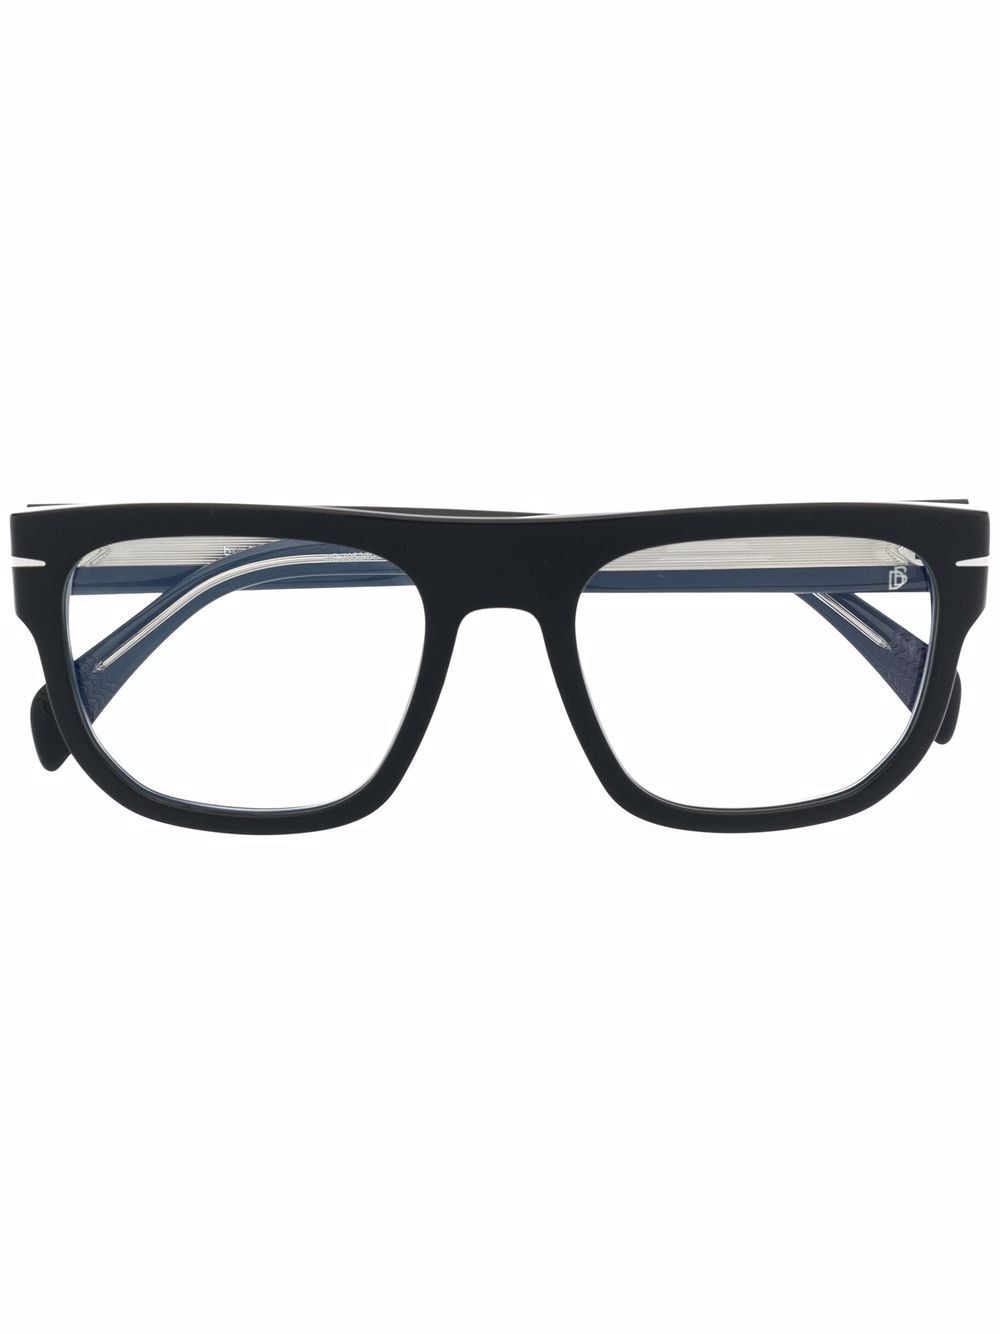 Eyewear by David Beckham polished square-frame glasses - Black von Eyewear by David Beckham